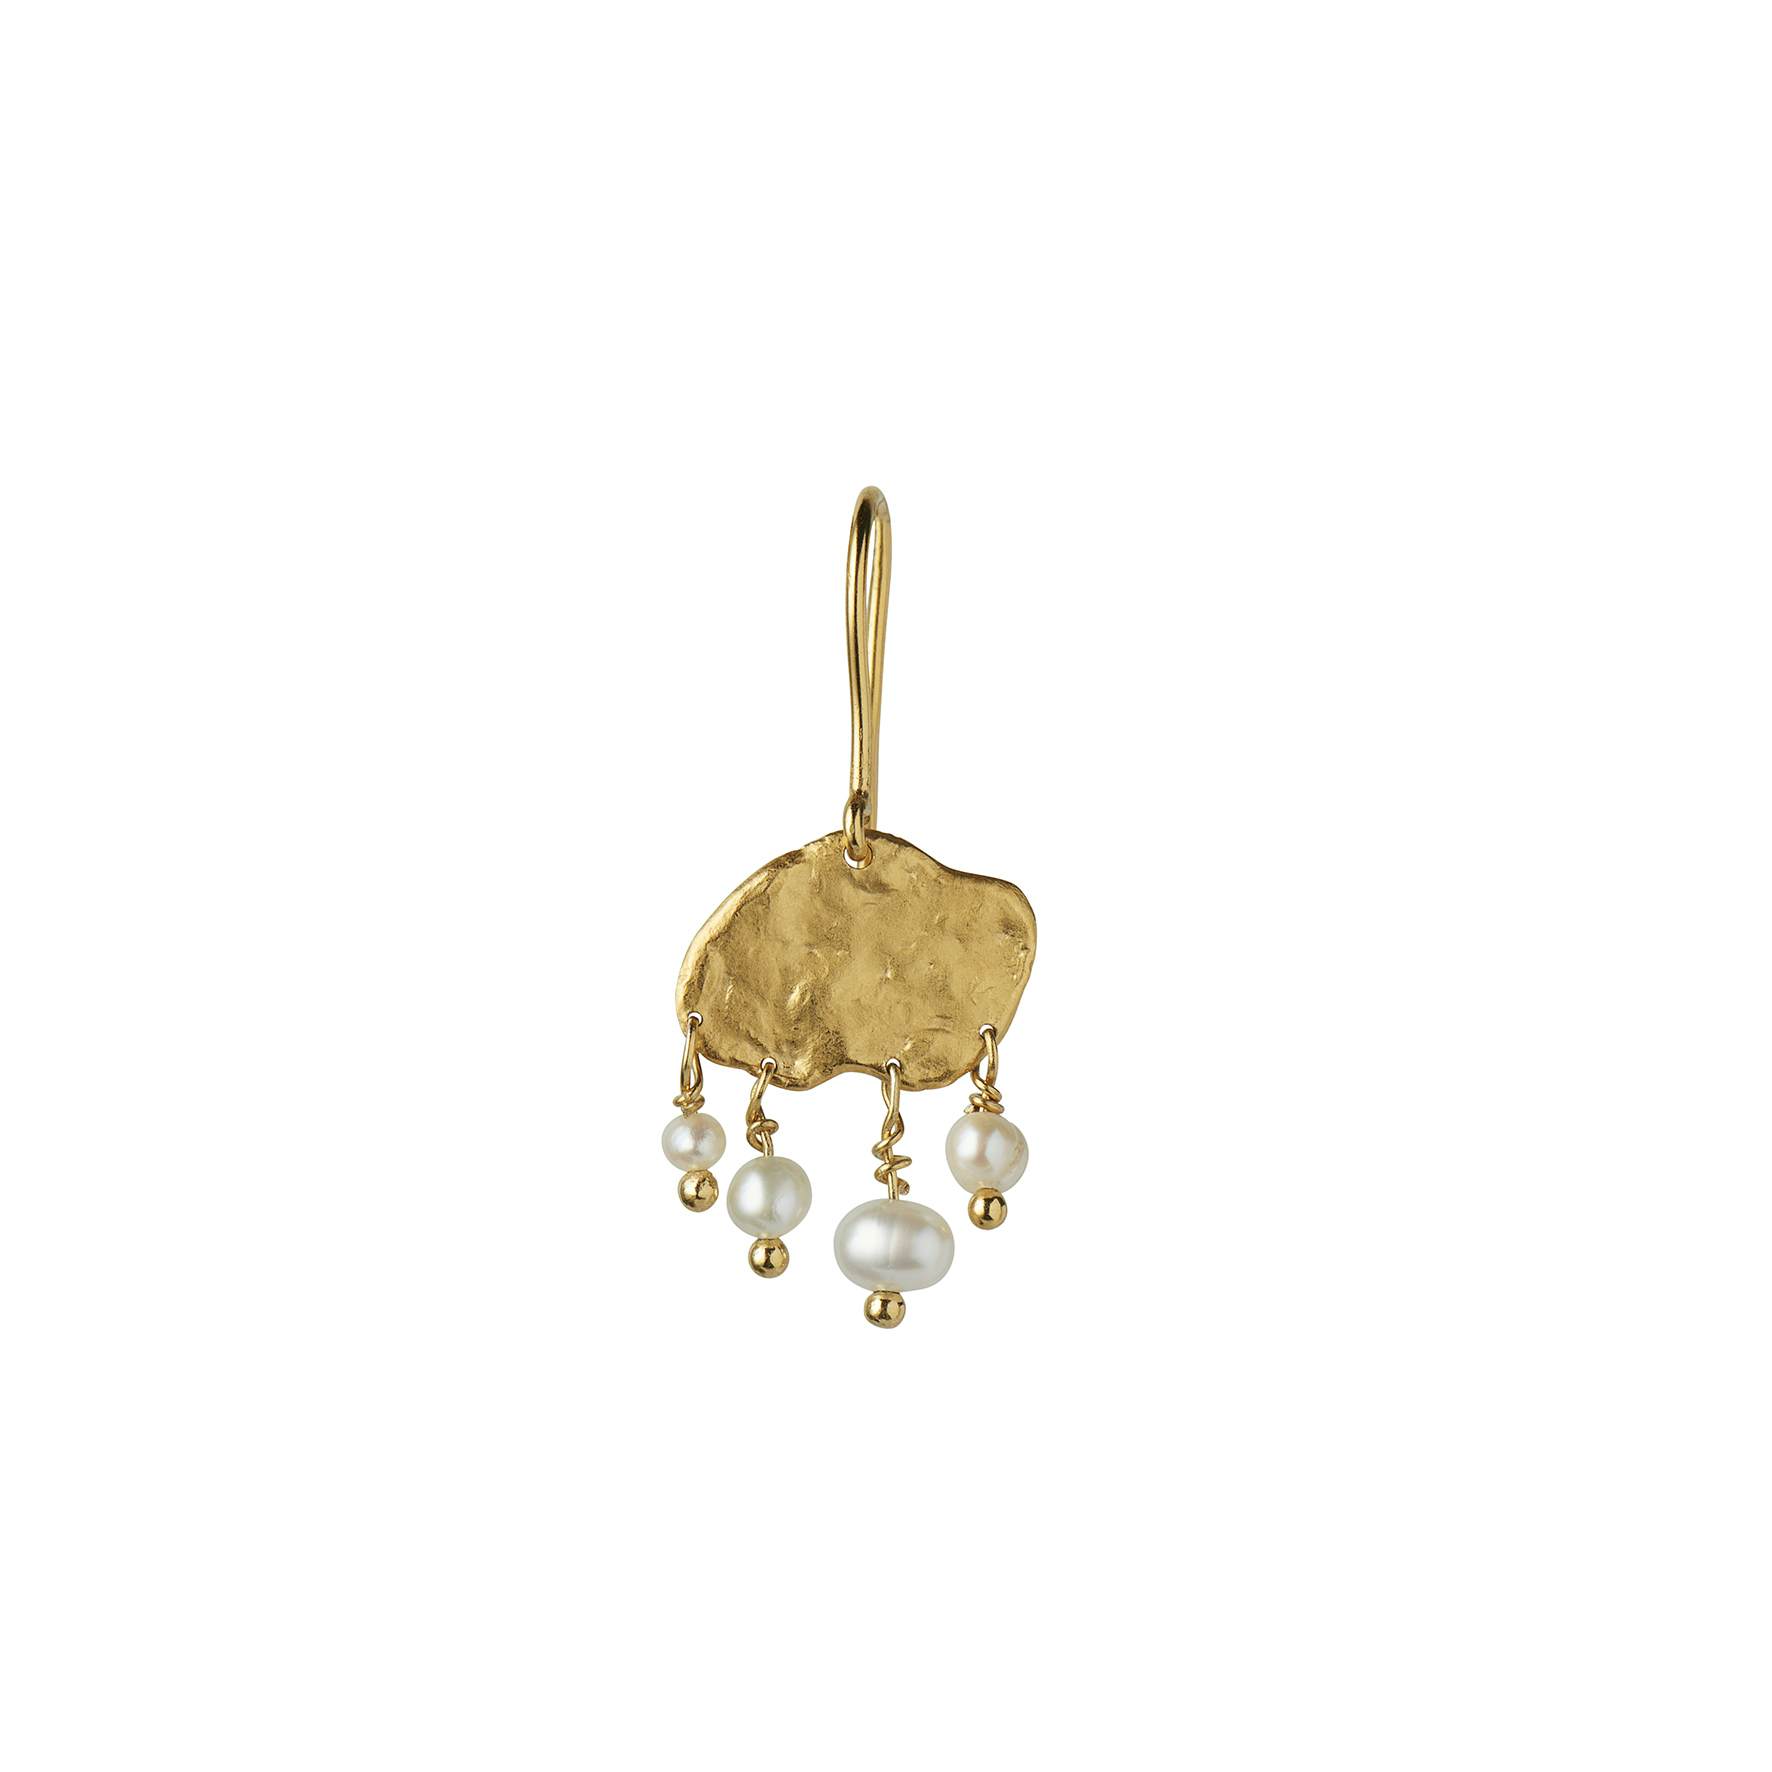 Big Gold Splash Earring – Elegant Pearls fra STINE A Jewelry i Forgyldt-Sølv Sterling 925